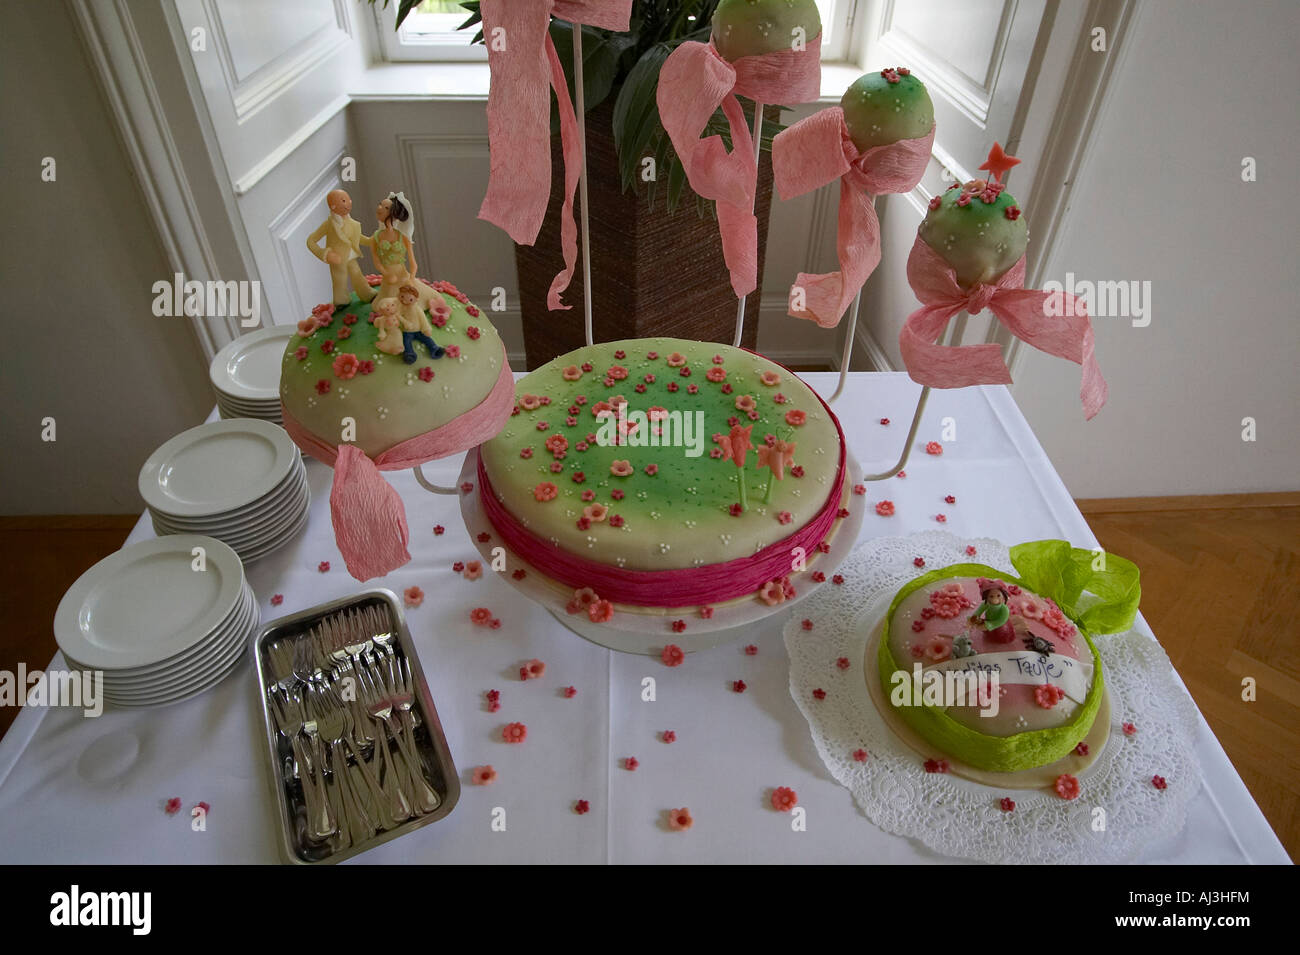 wedding cake Stock Photo